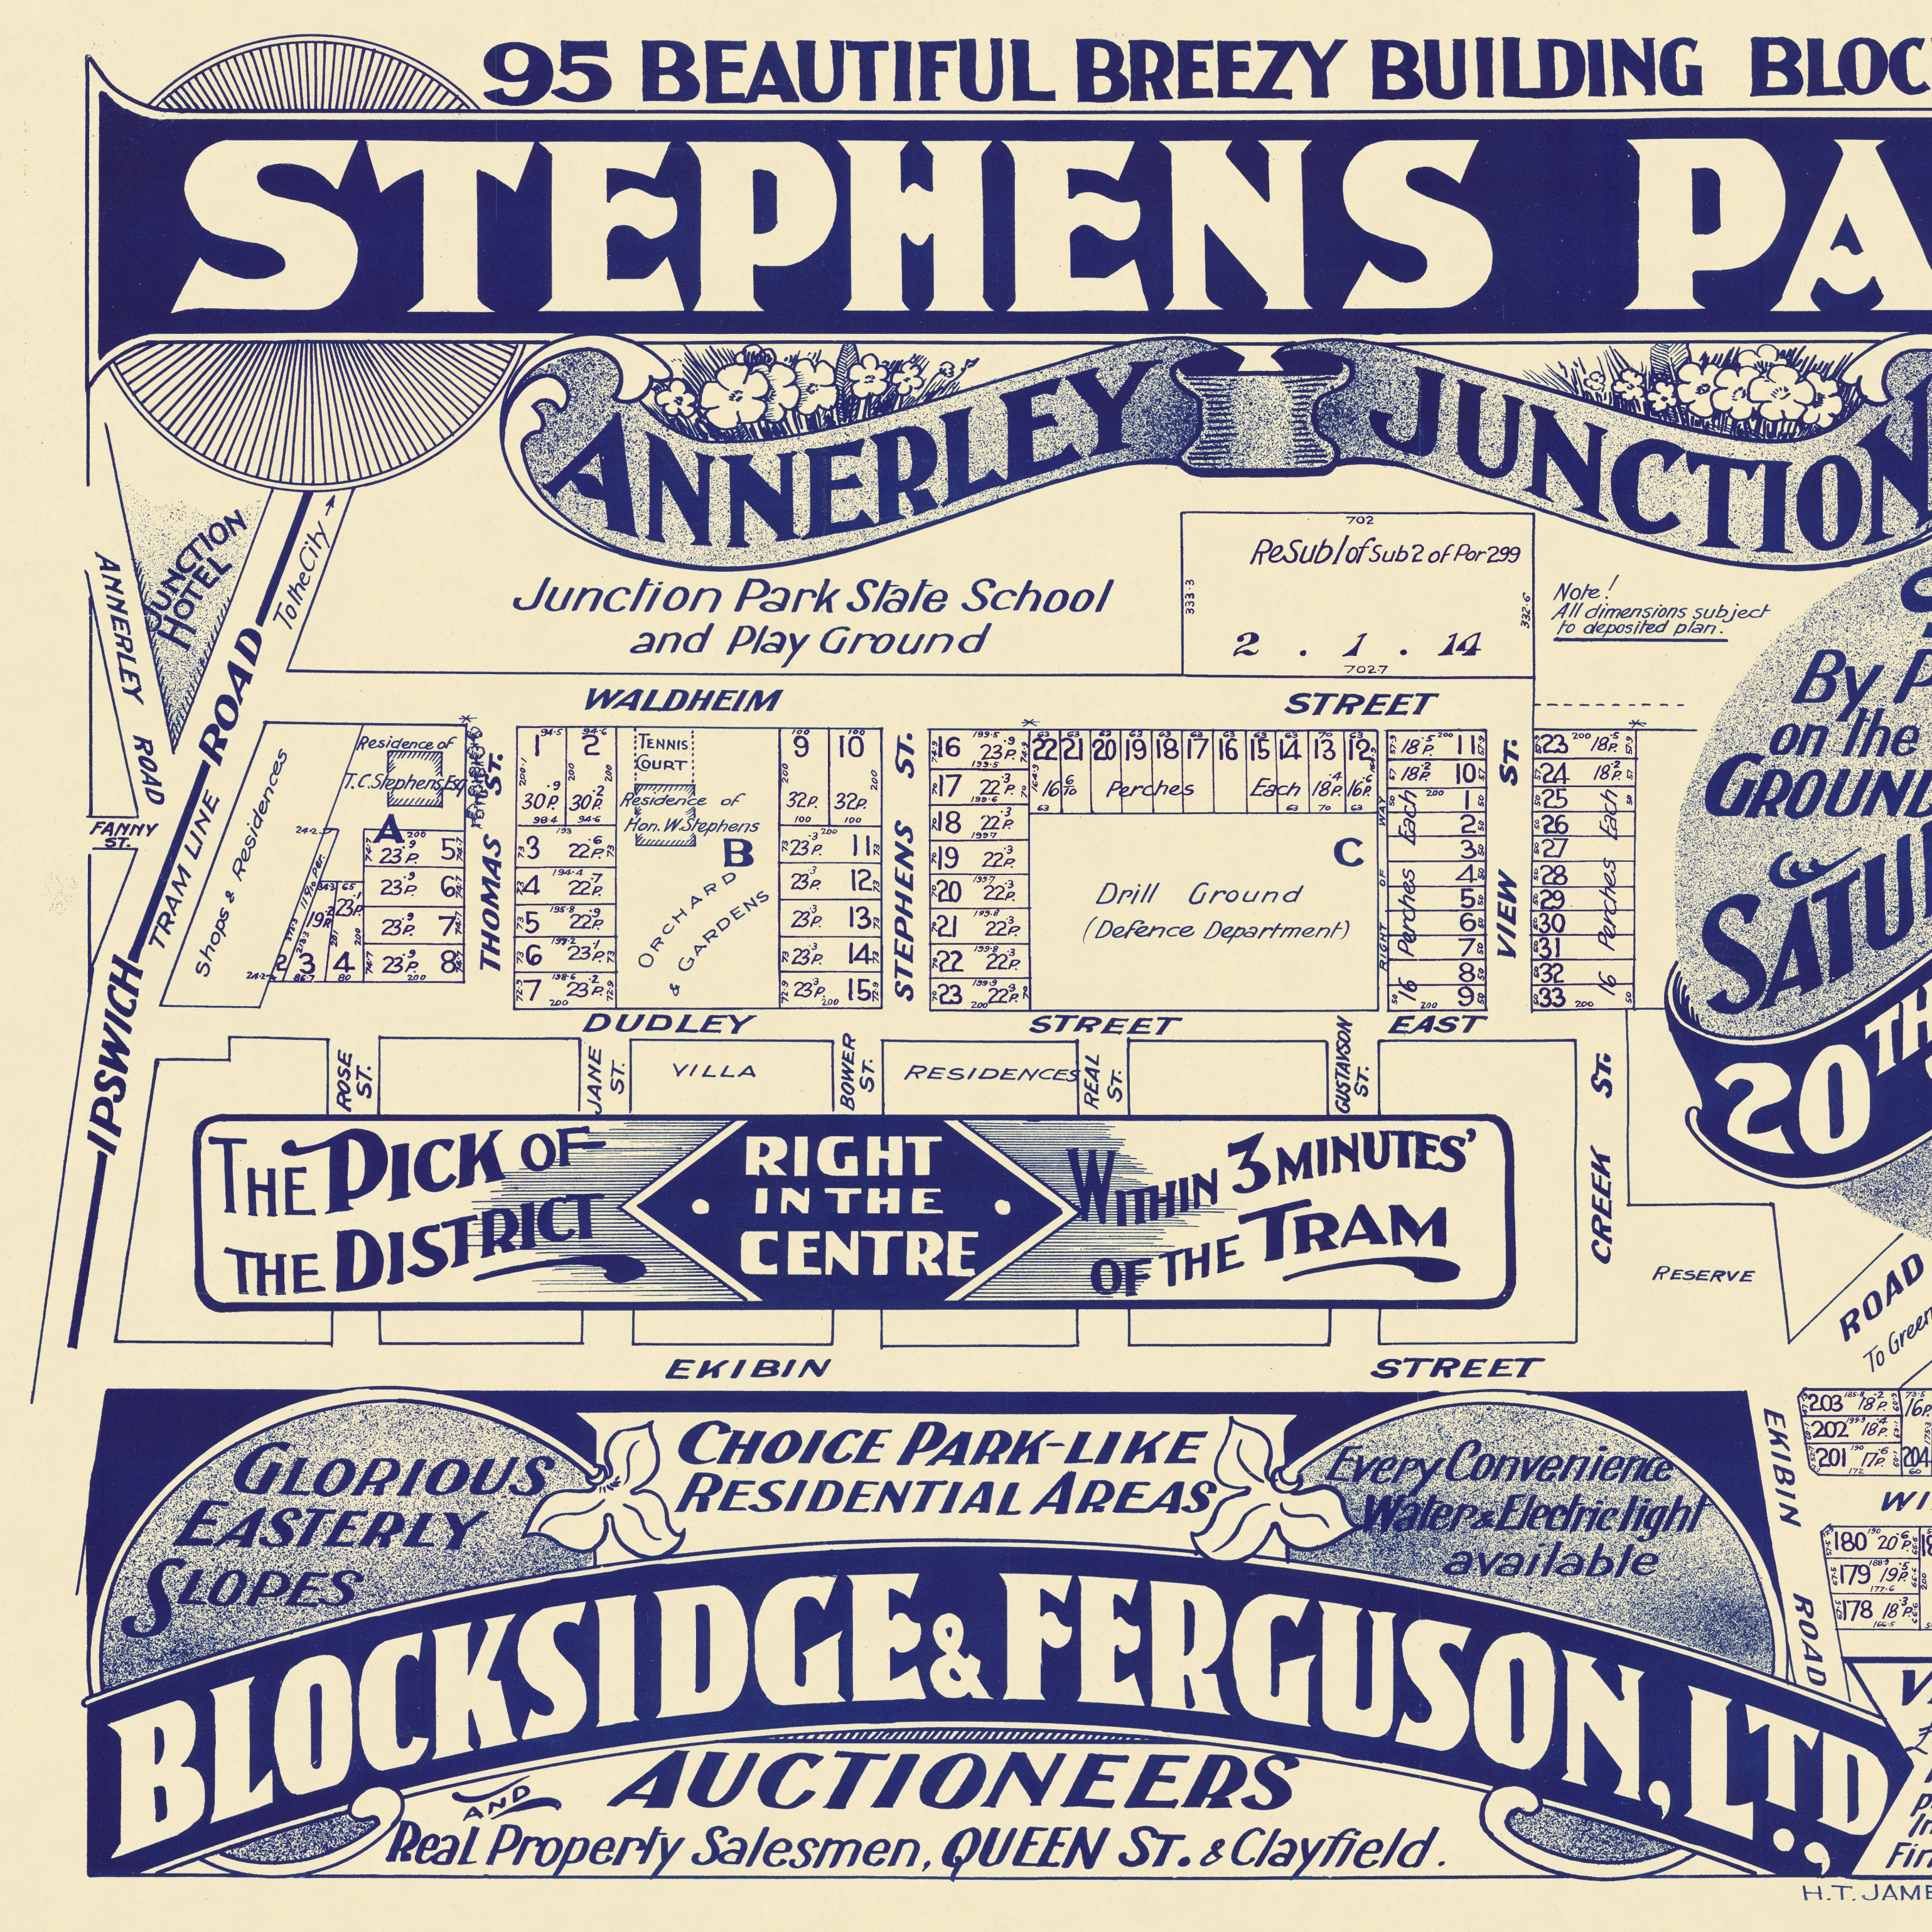 1923 Annerley - Stephens Park Estate